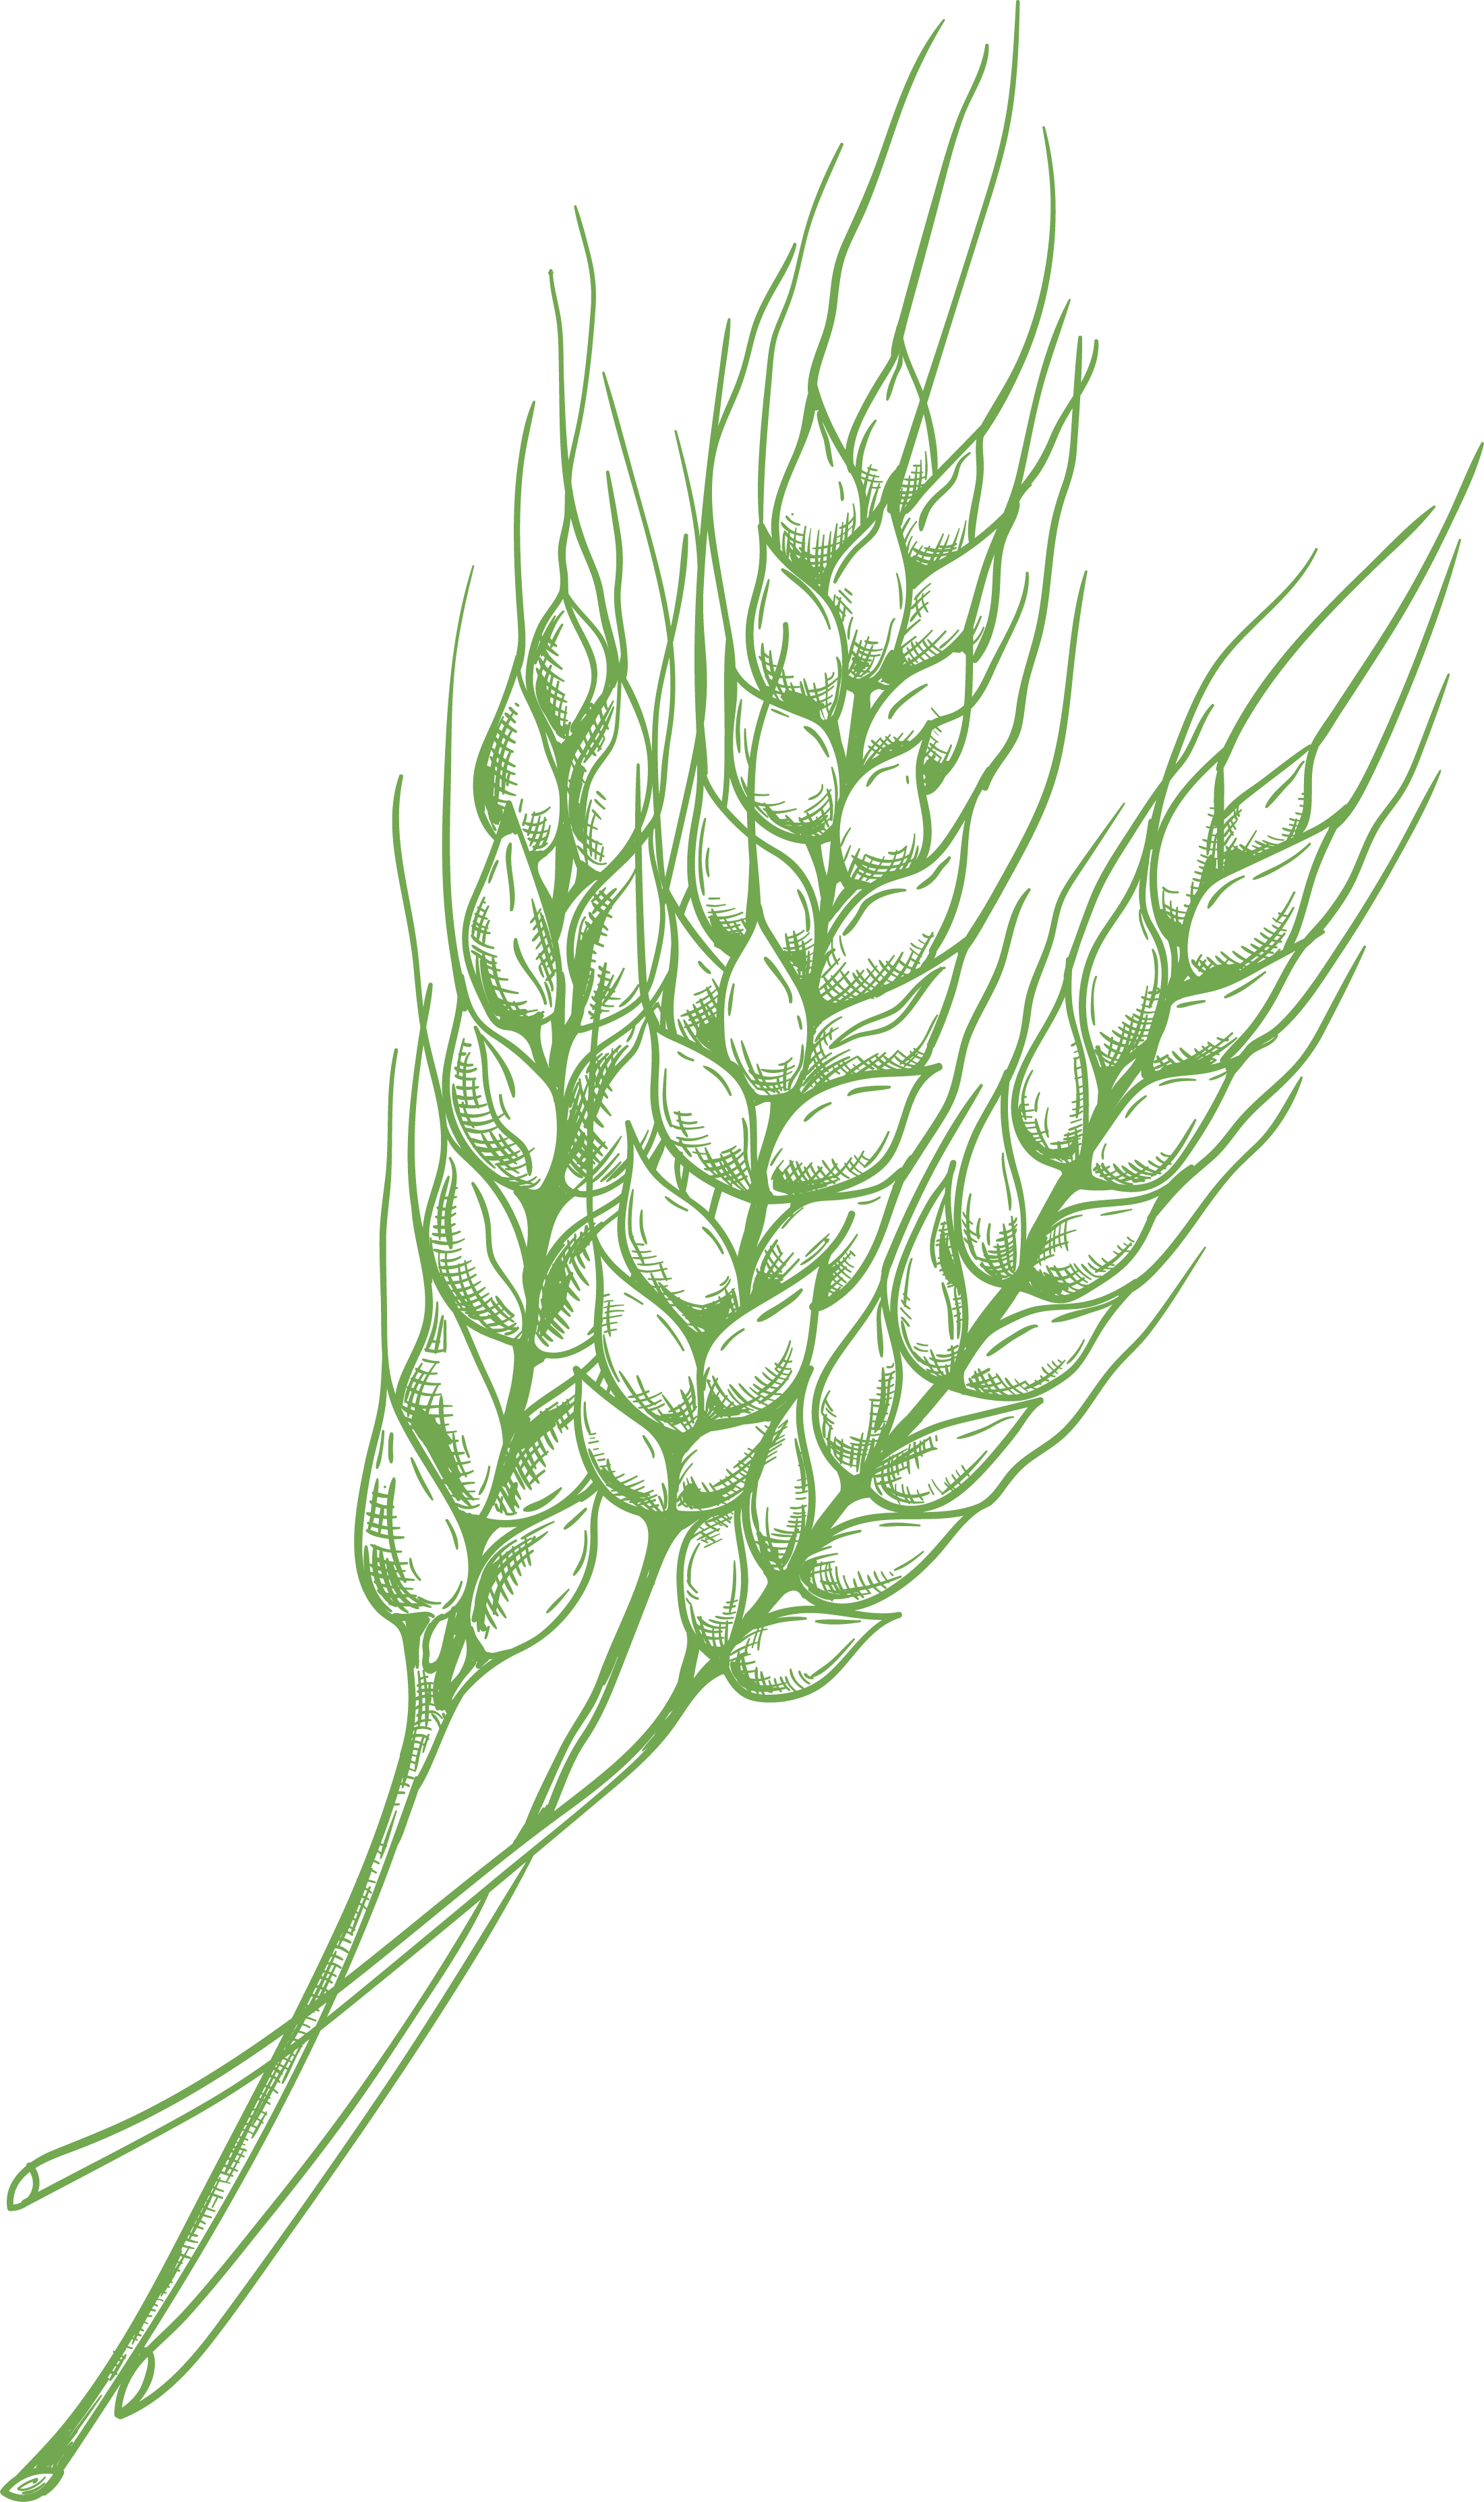 Grain illustration